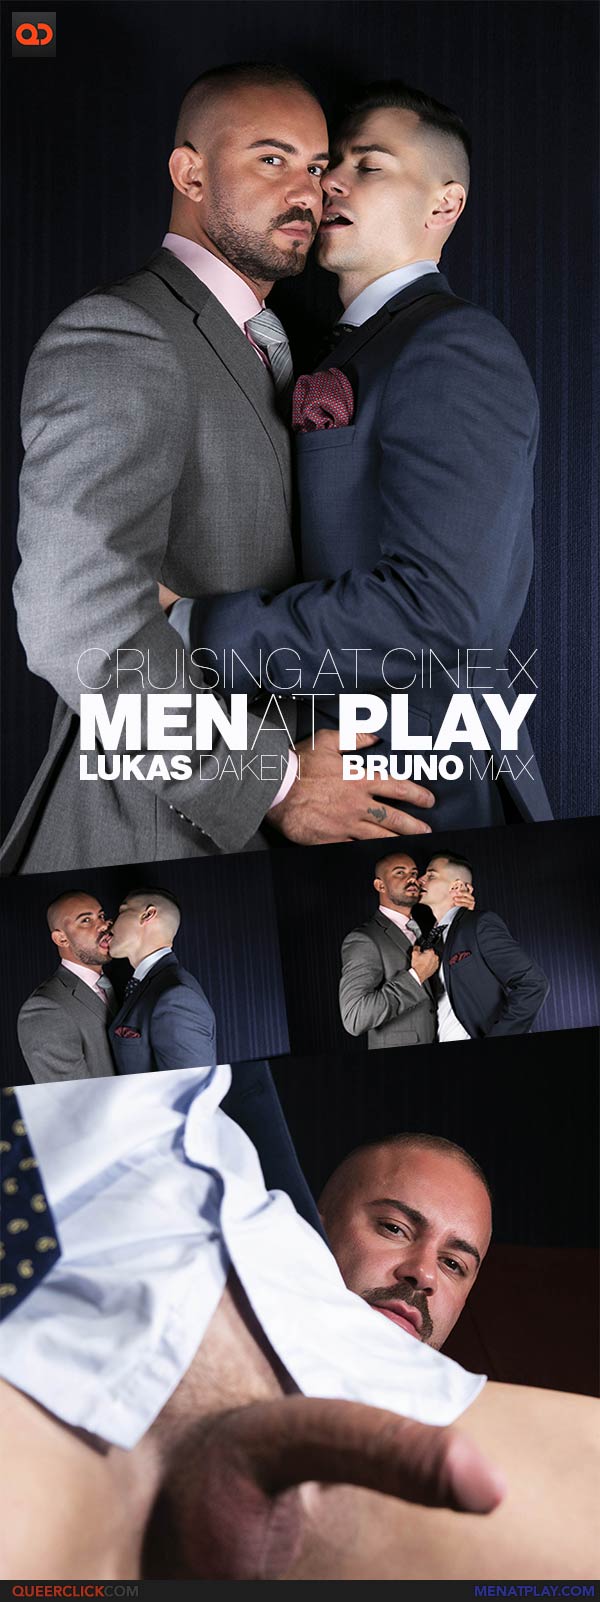 MenatPlay: Lukas Daken and Bruno Max